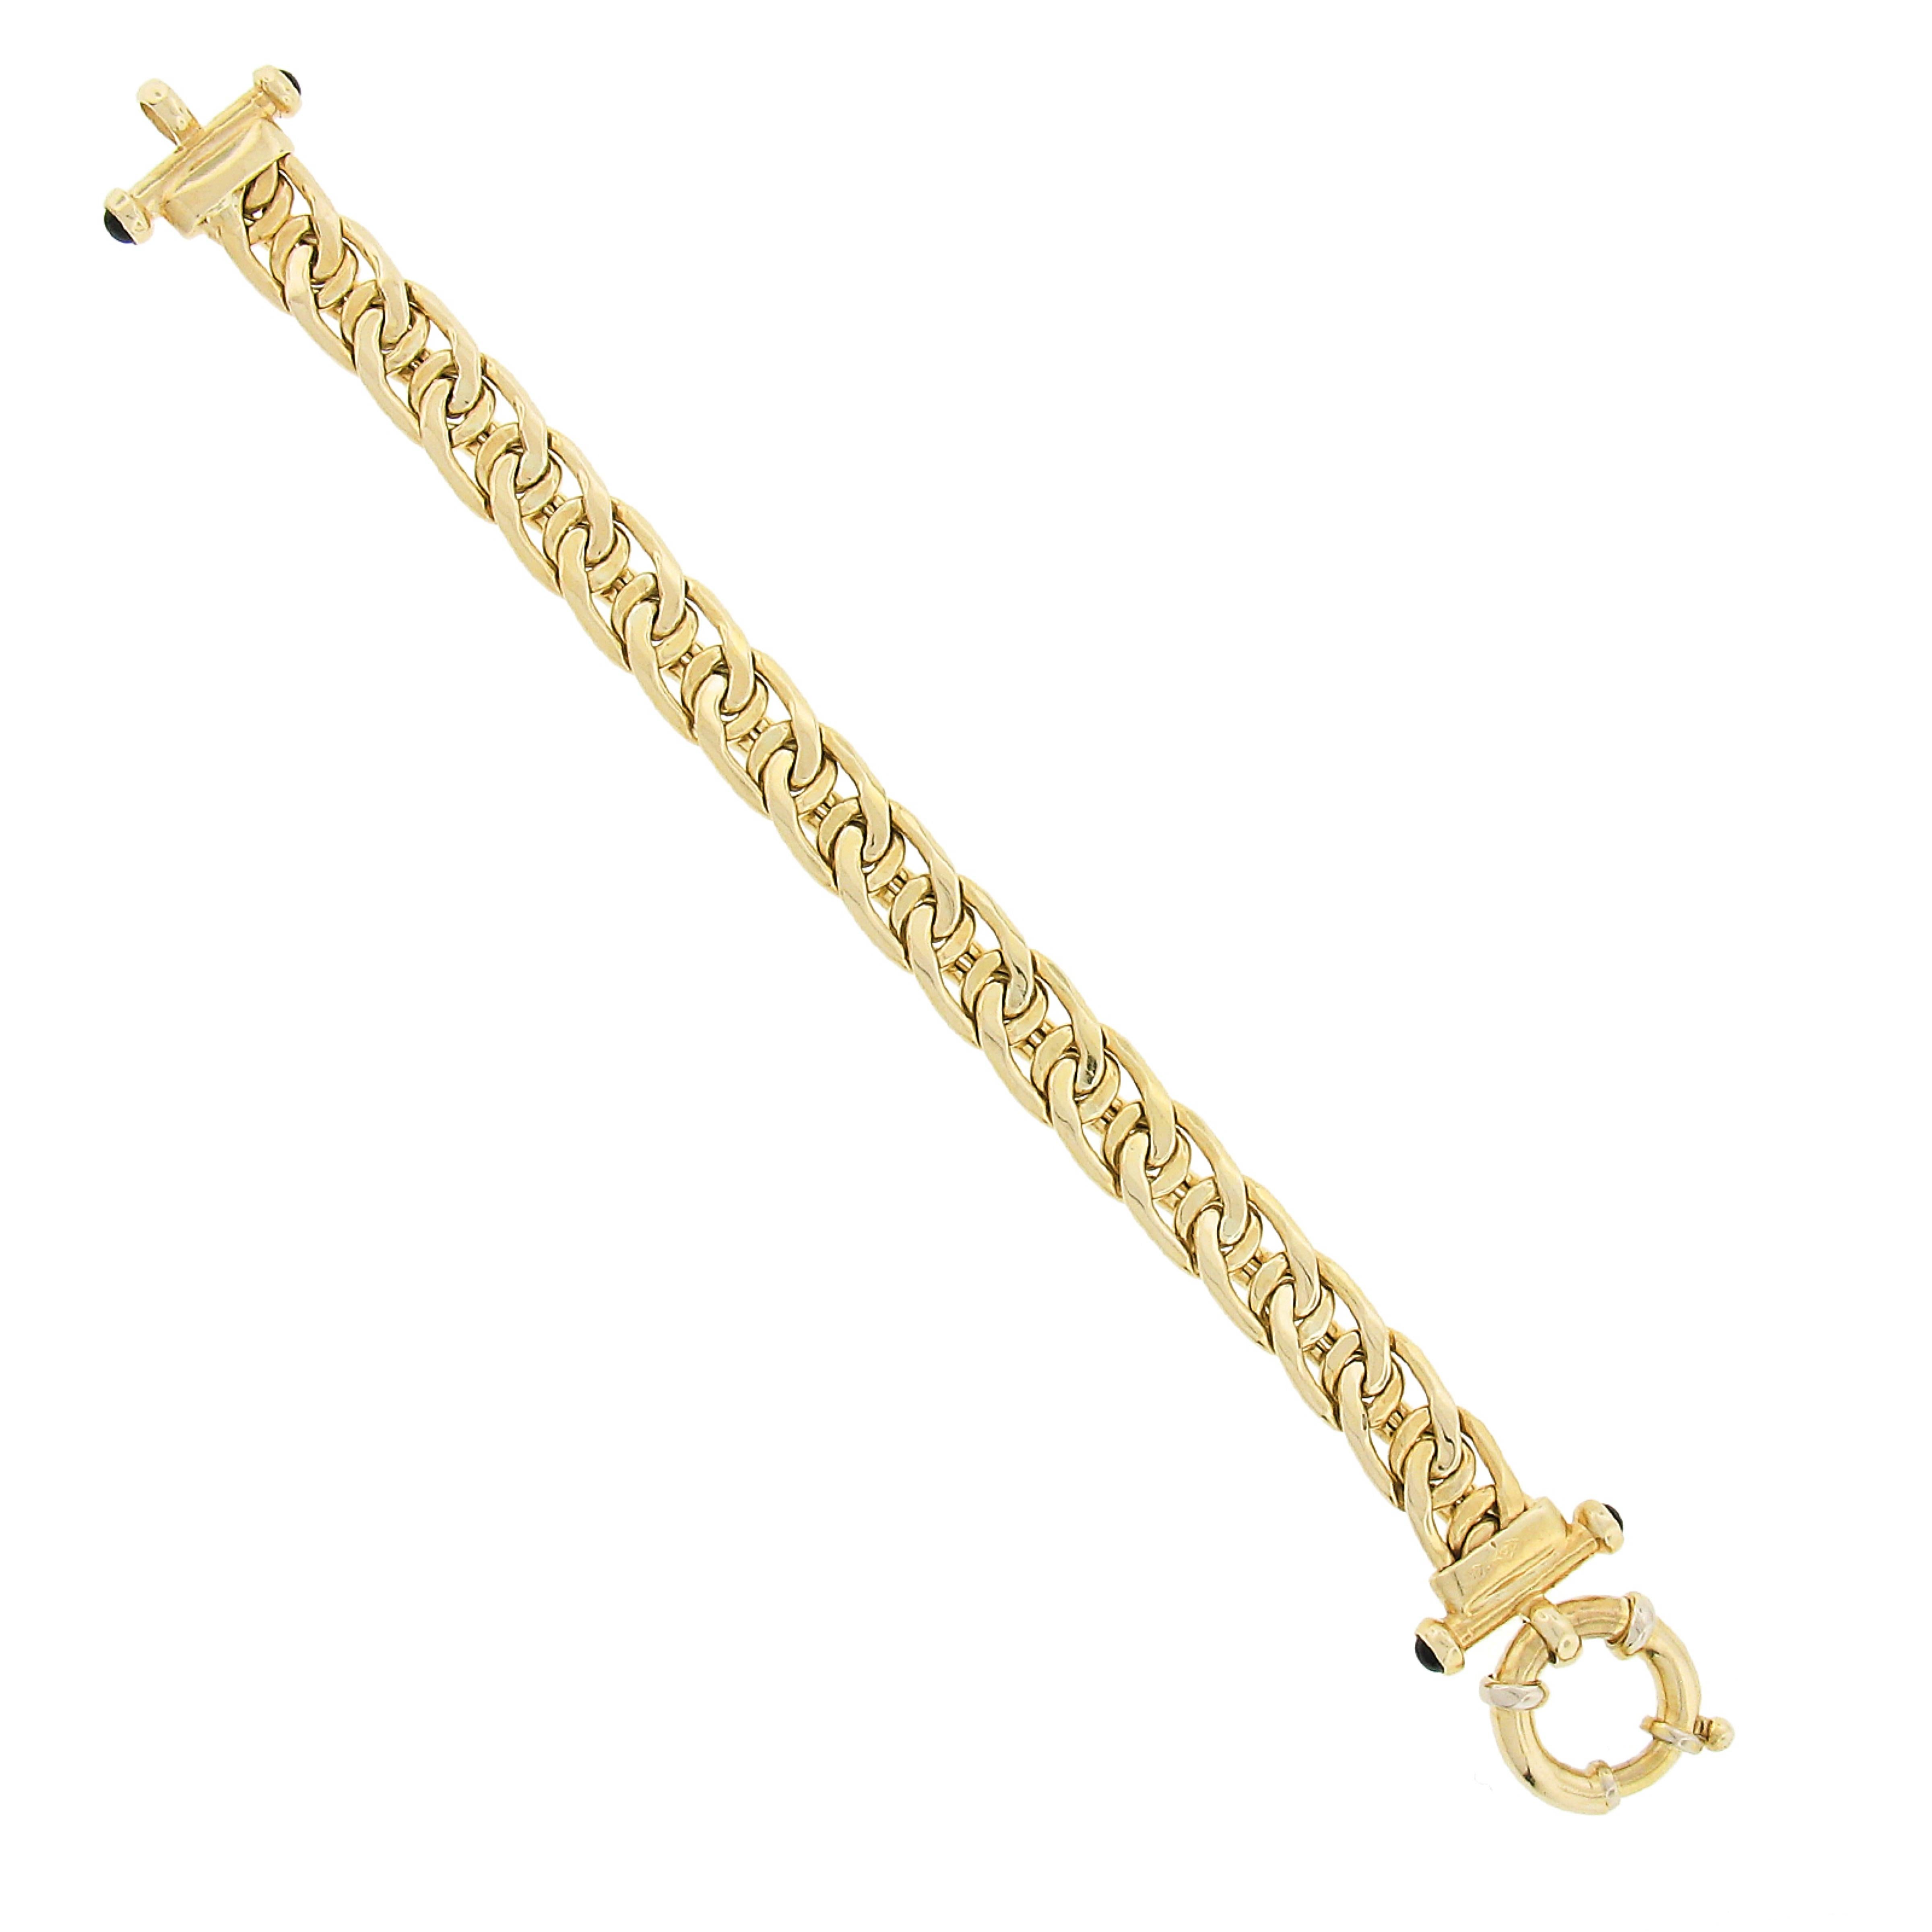 Cabochon H. Stern 14k Gold Puffed Bismark Link W/ Black Onyx End Caps Bracelet